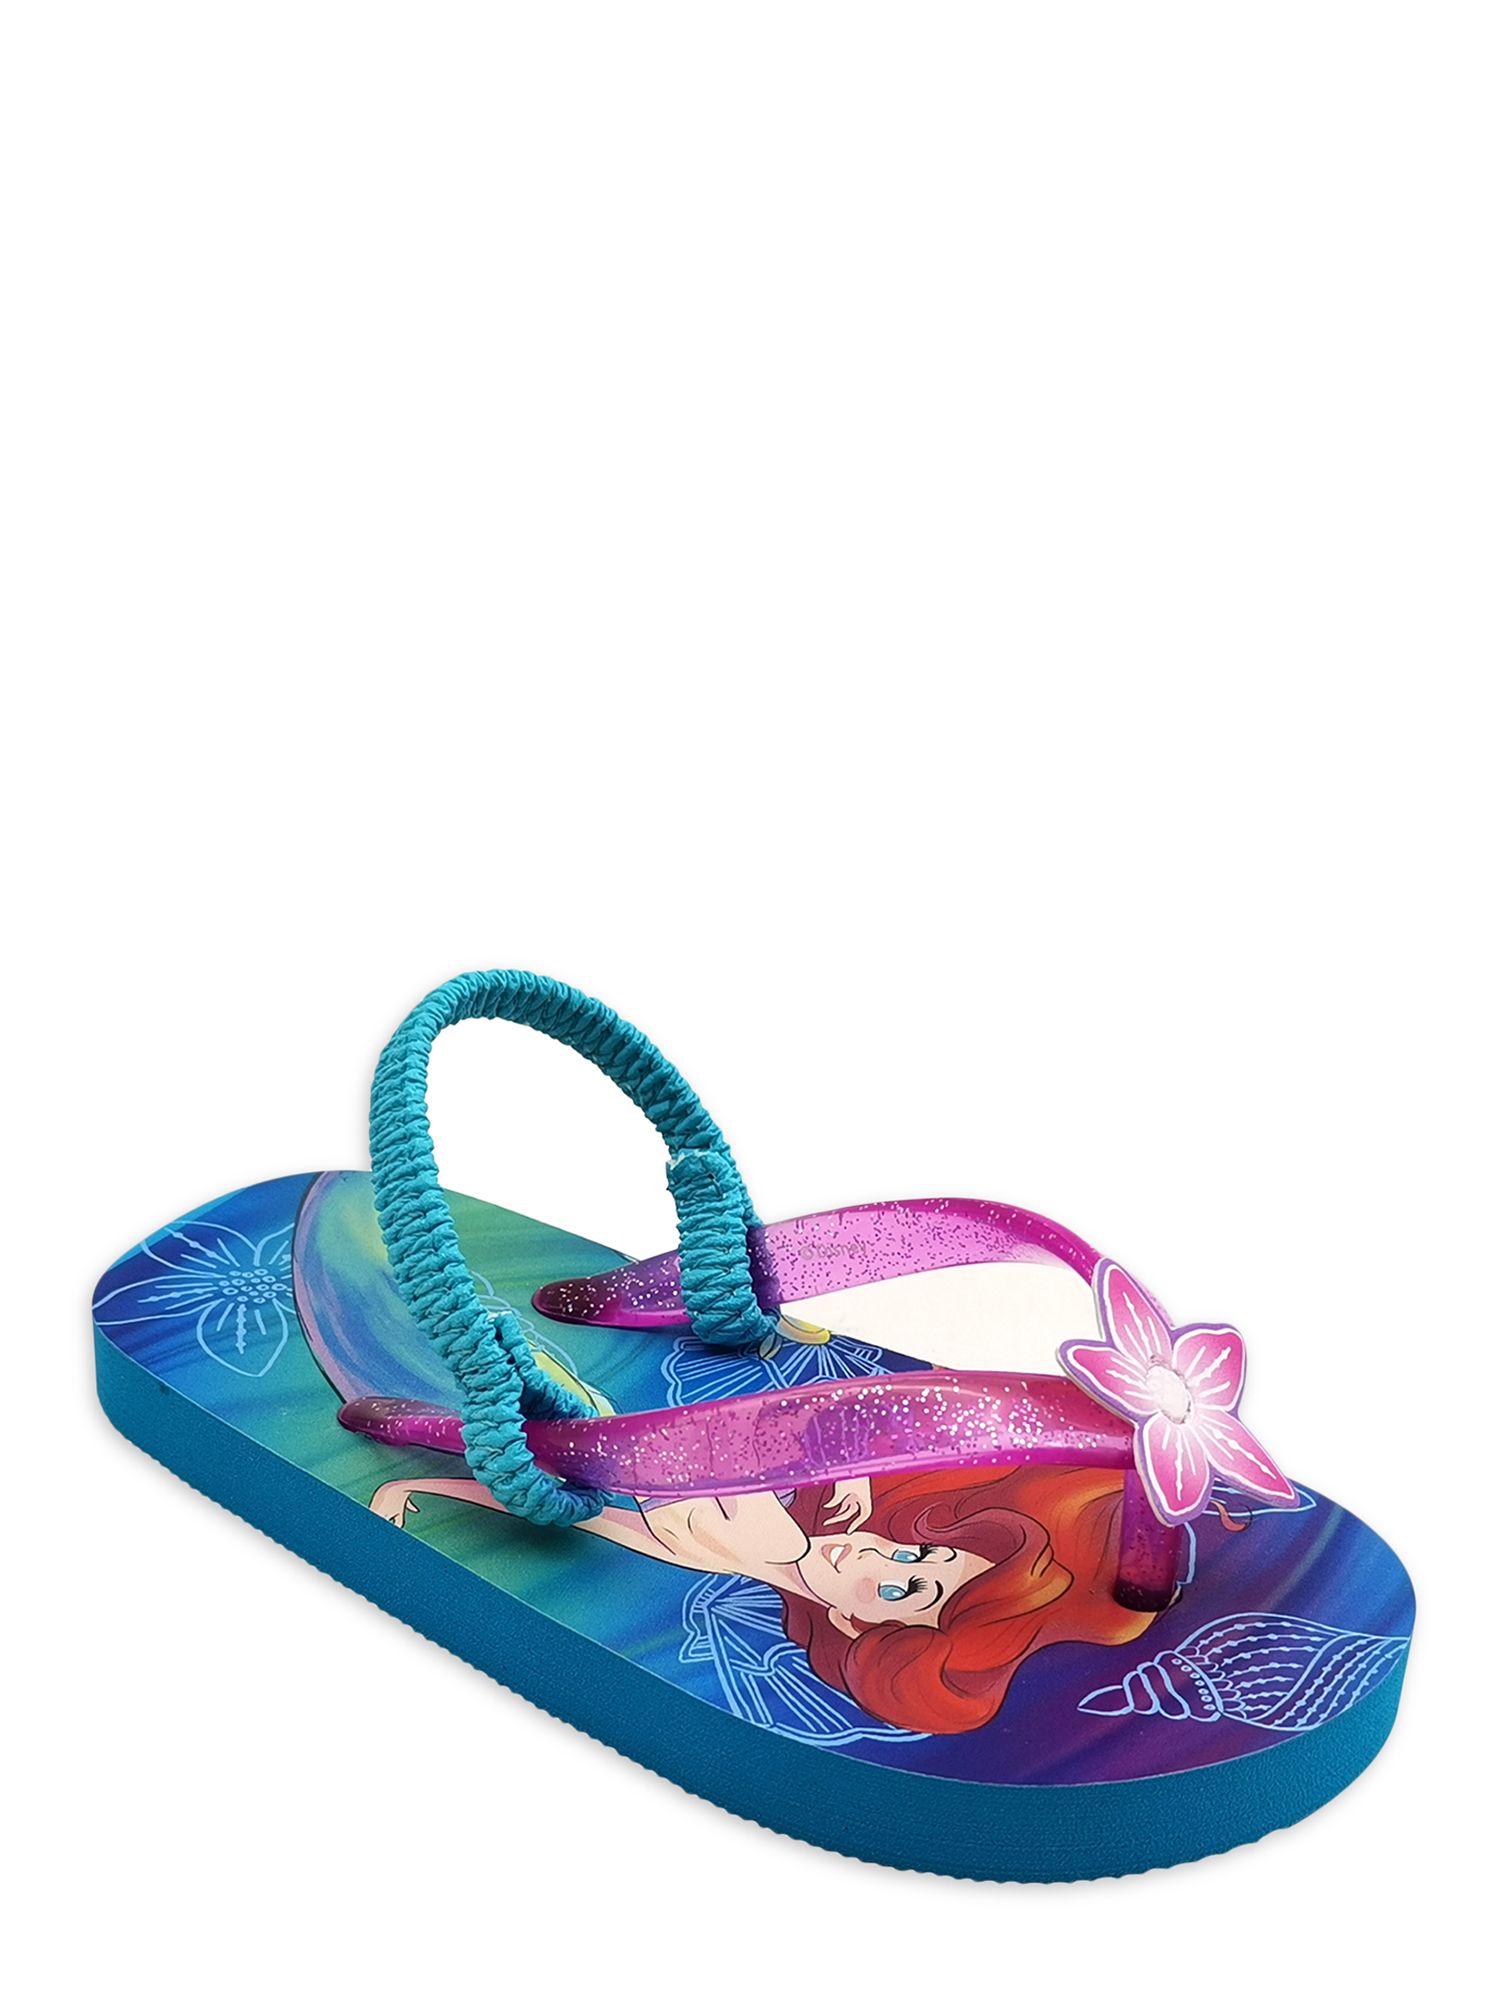 Disney The Little Mermaid Summer Fun Flip Flop & Beach Tote Set (Toddler Girls) - Walmart.com